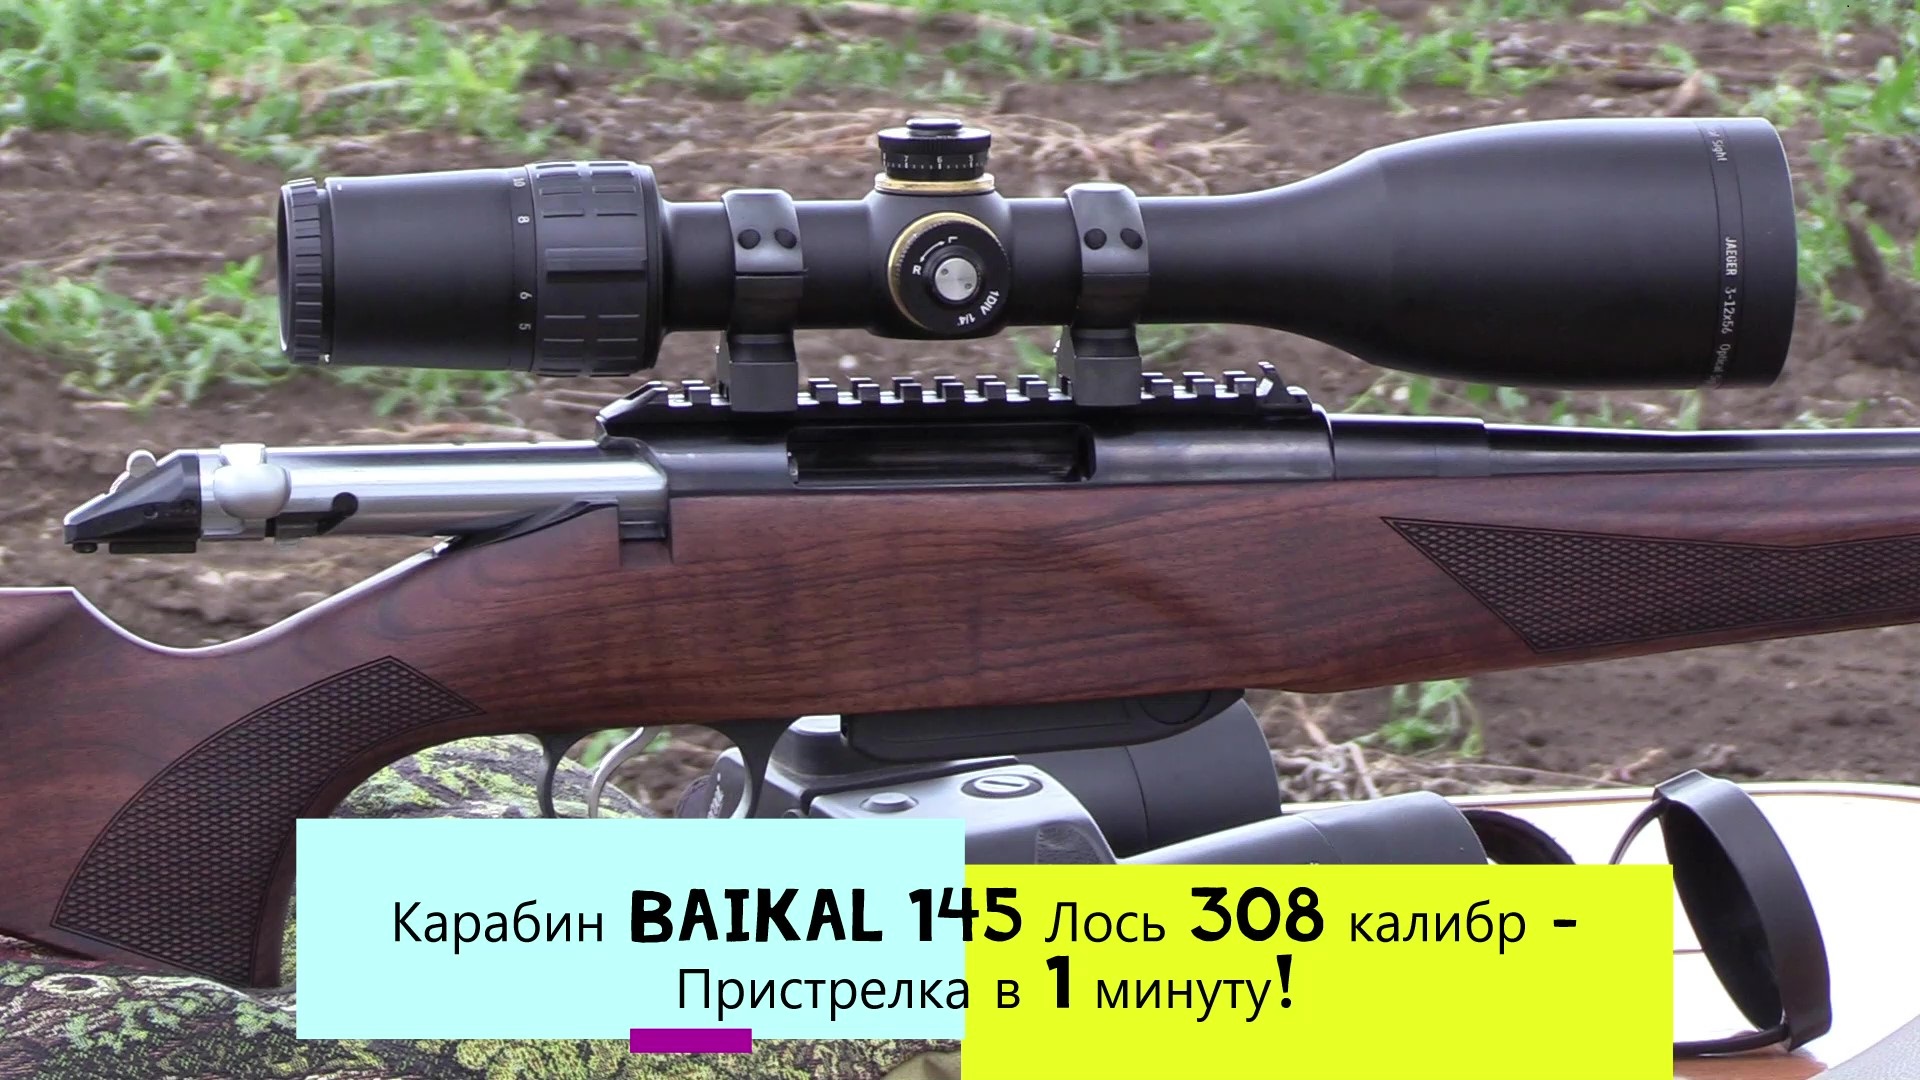 Байкал 145 лось 308